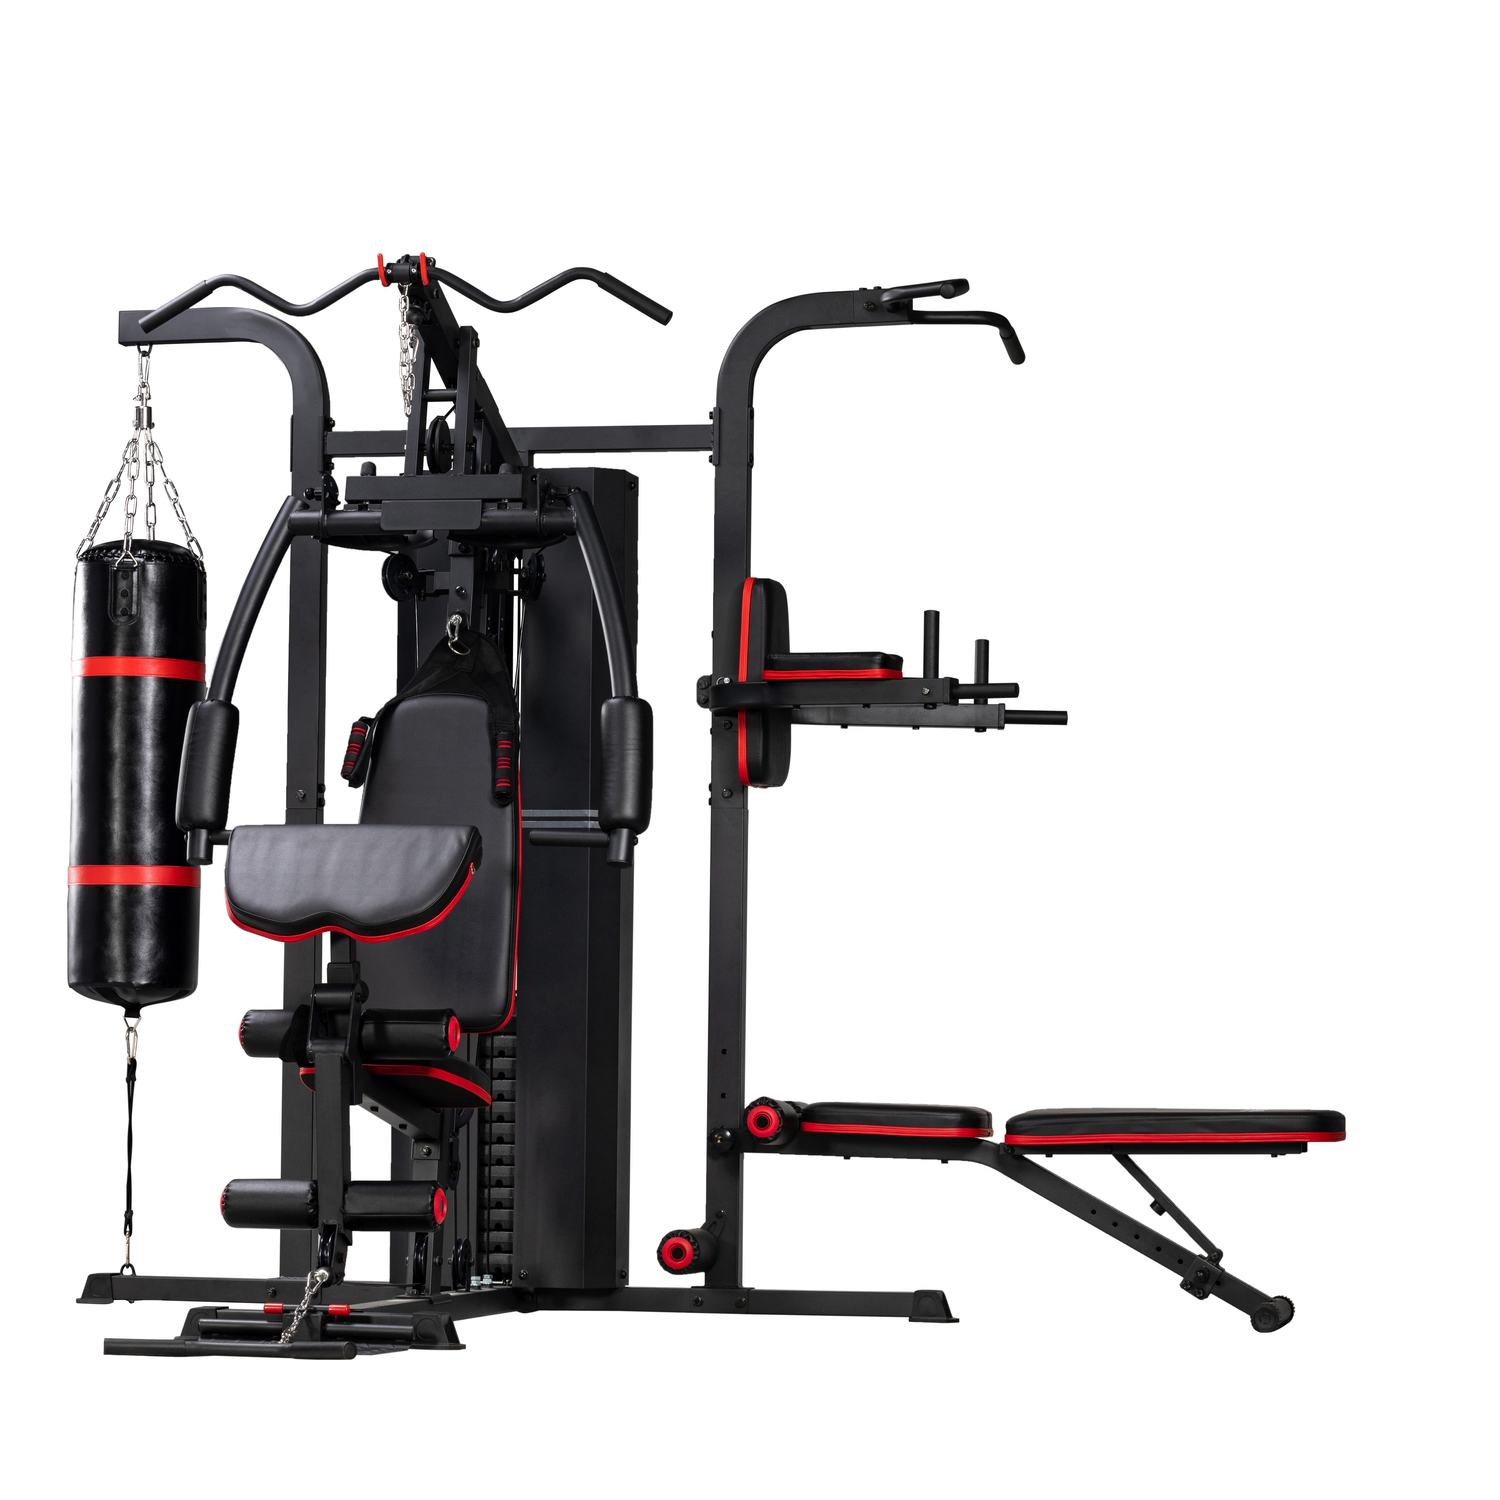 RBSM Gym Set 631S Home Gymset Workout Machine Strength Training